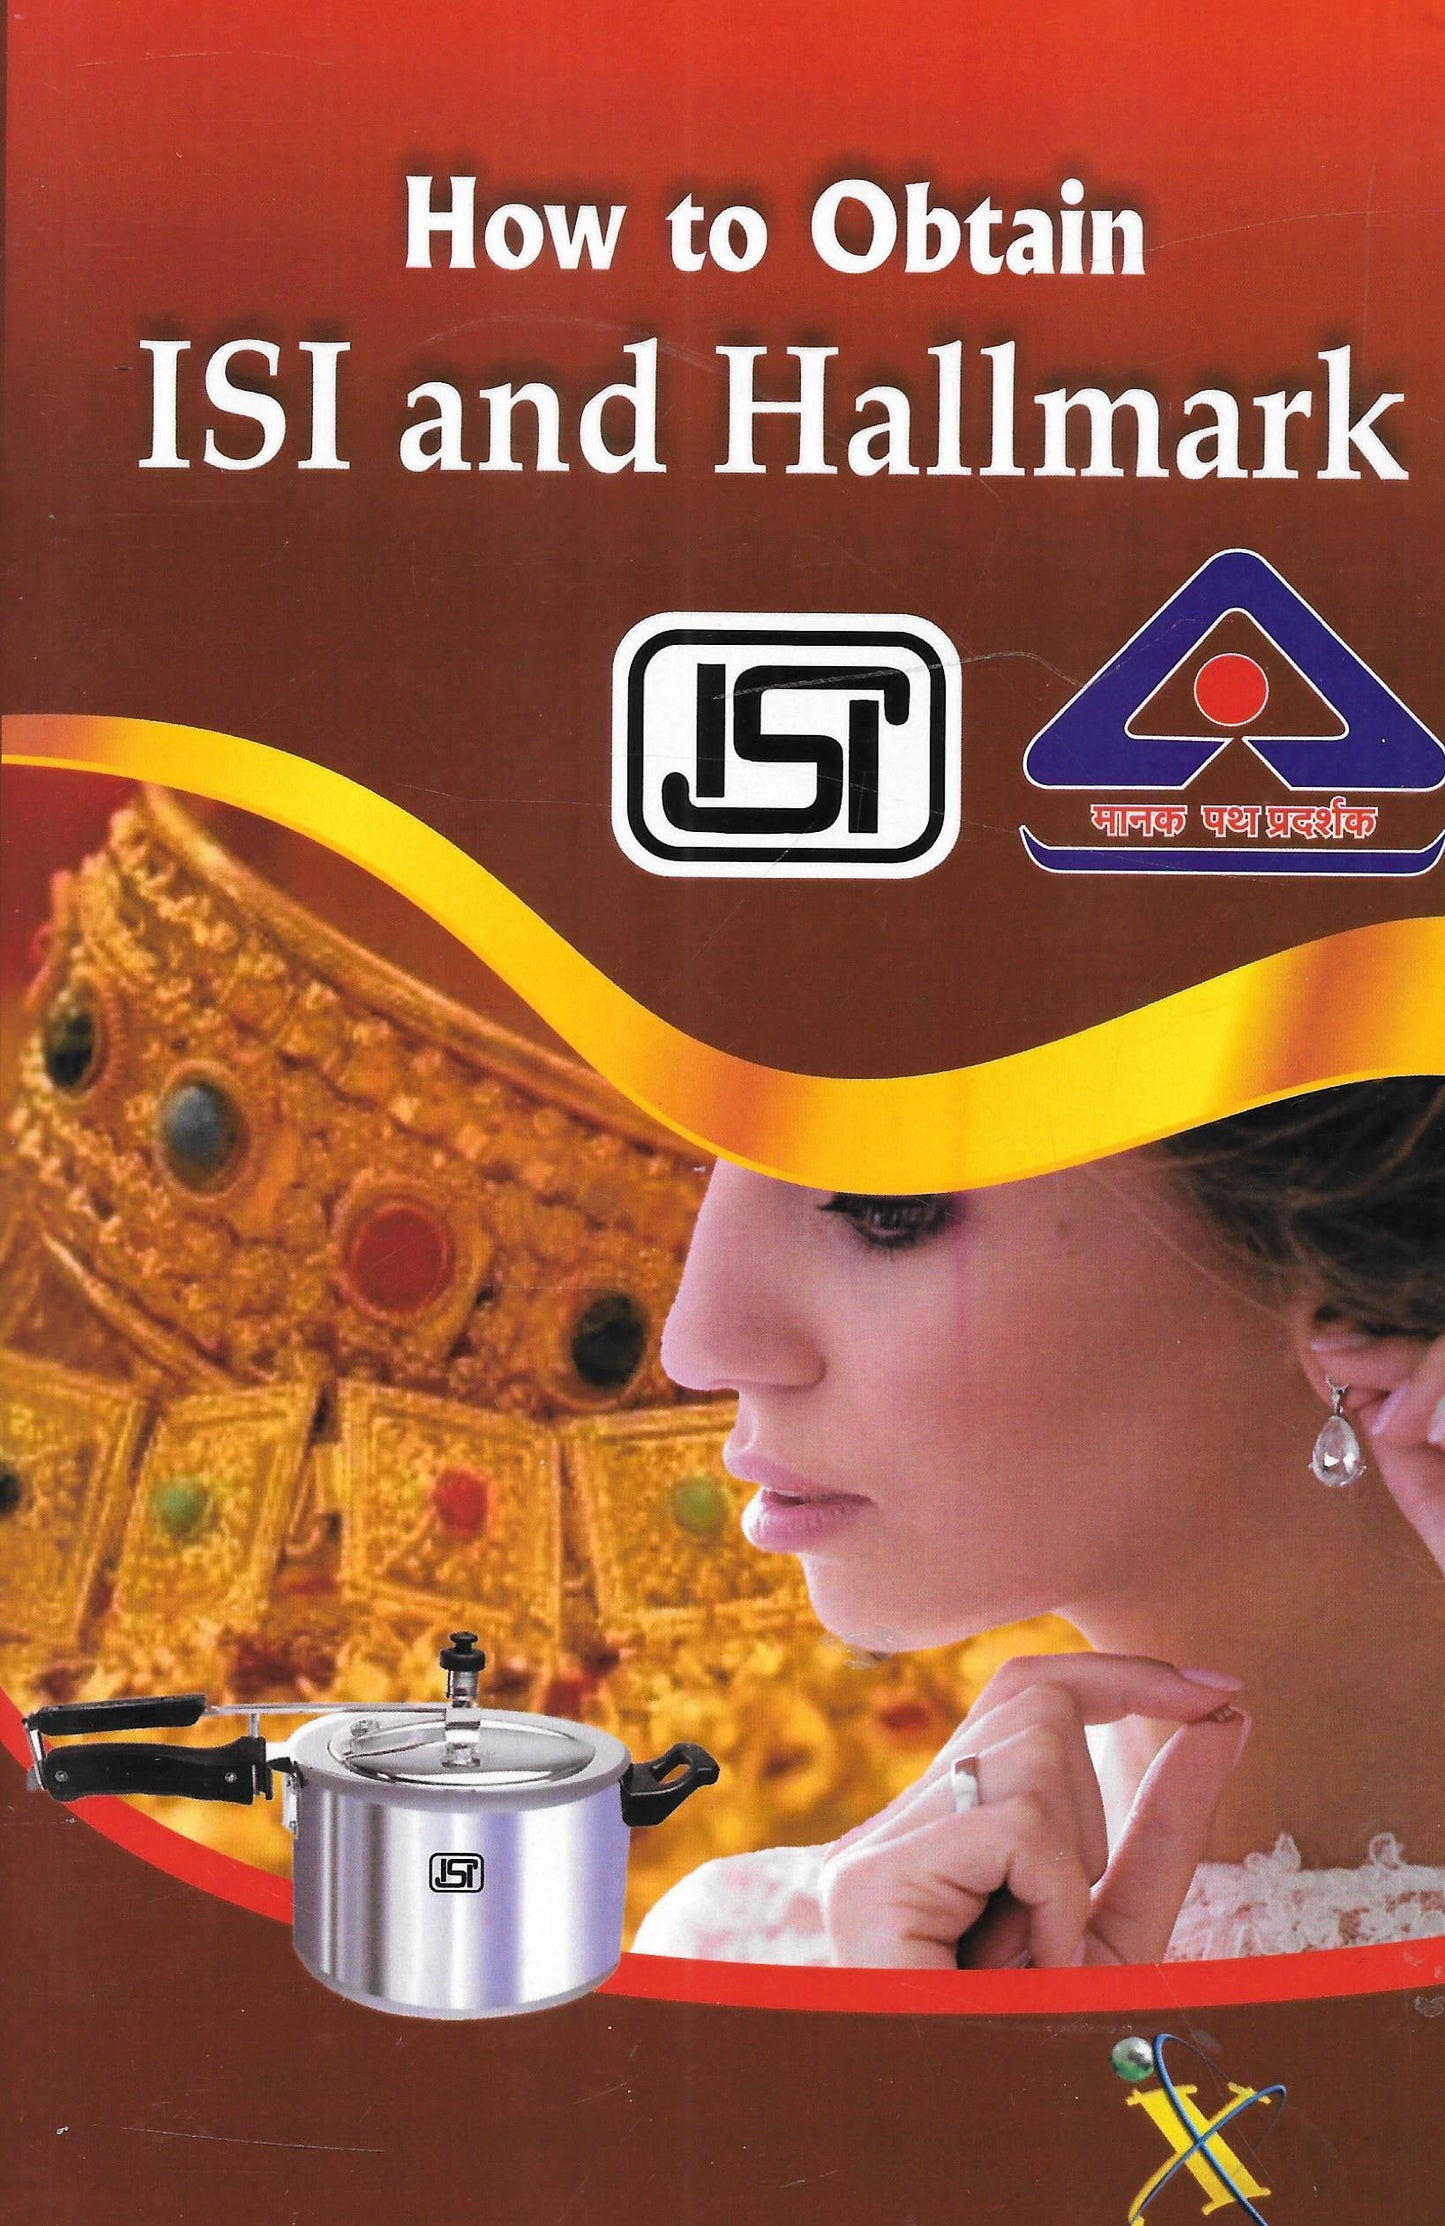 How to obtain ISI and Hallmark